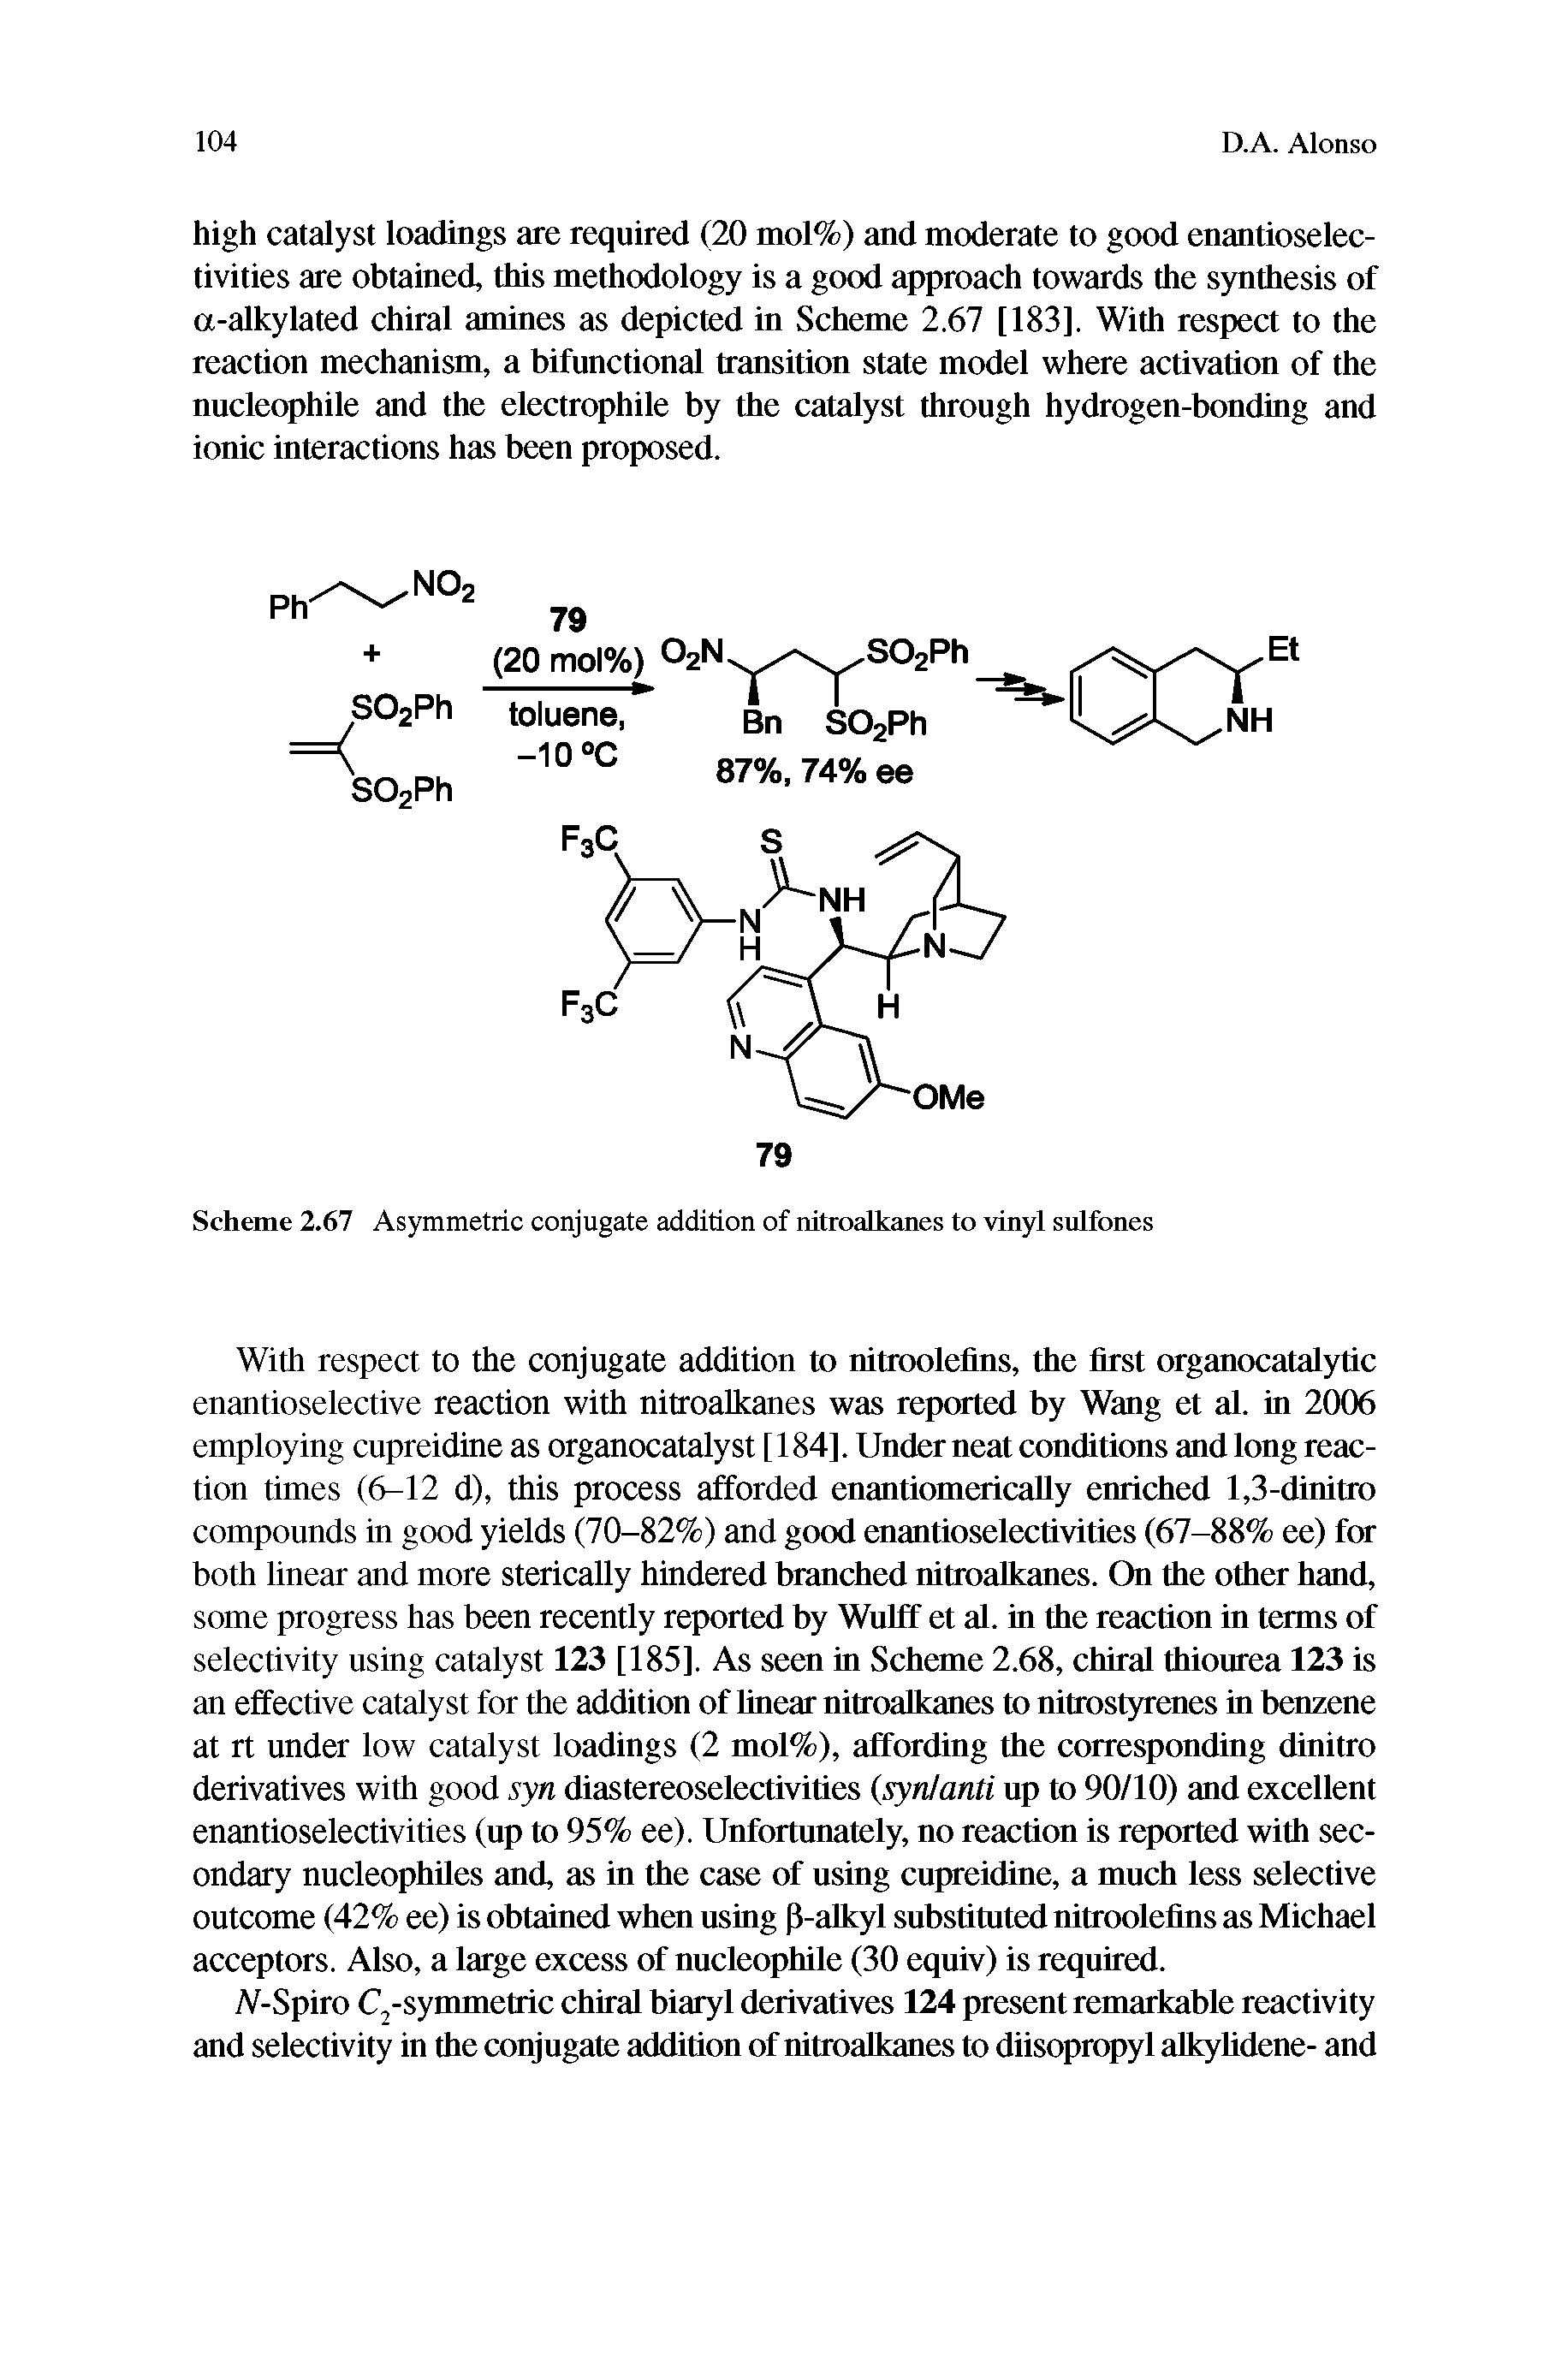 Scheme 2.67 Asymmetric conjugate addition of nitroalkanes to vinyl sulfones...